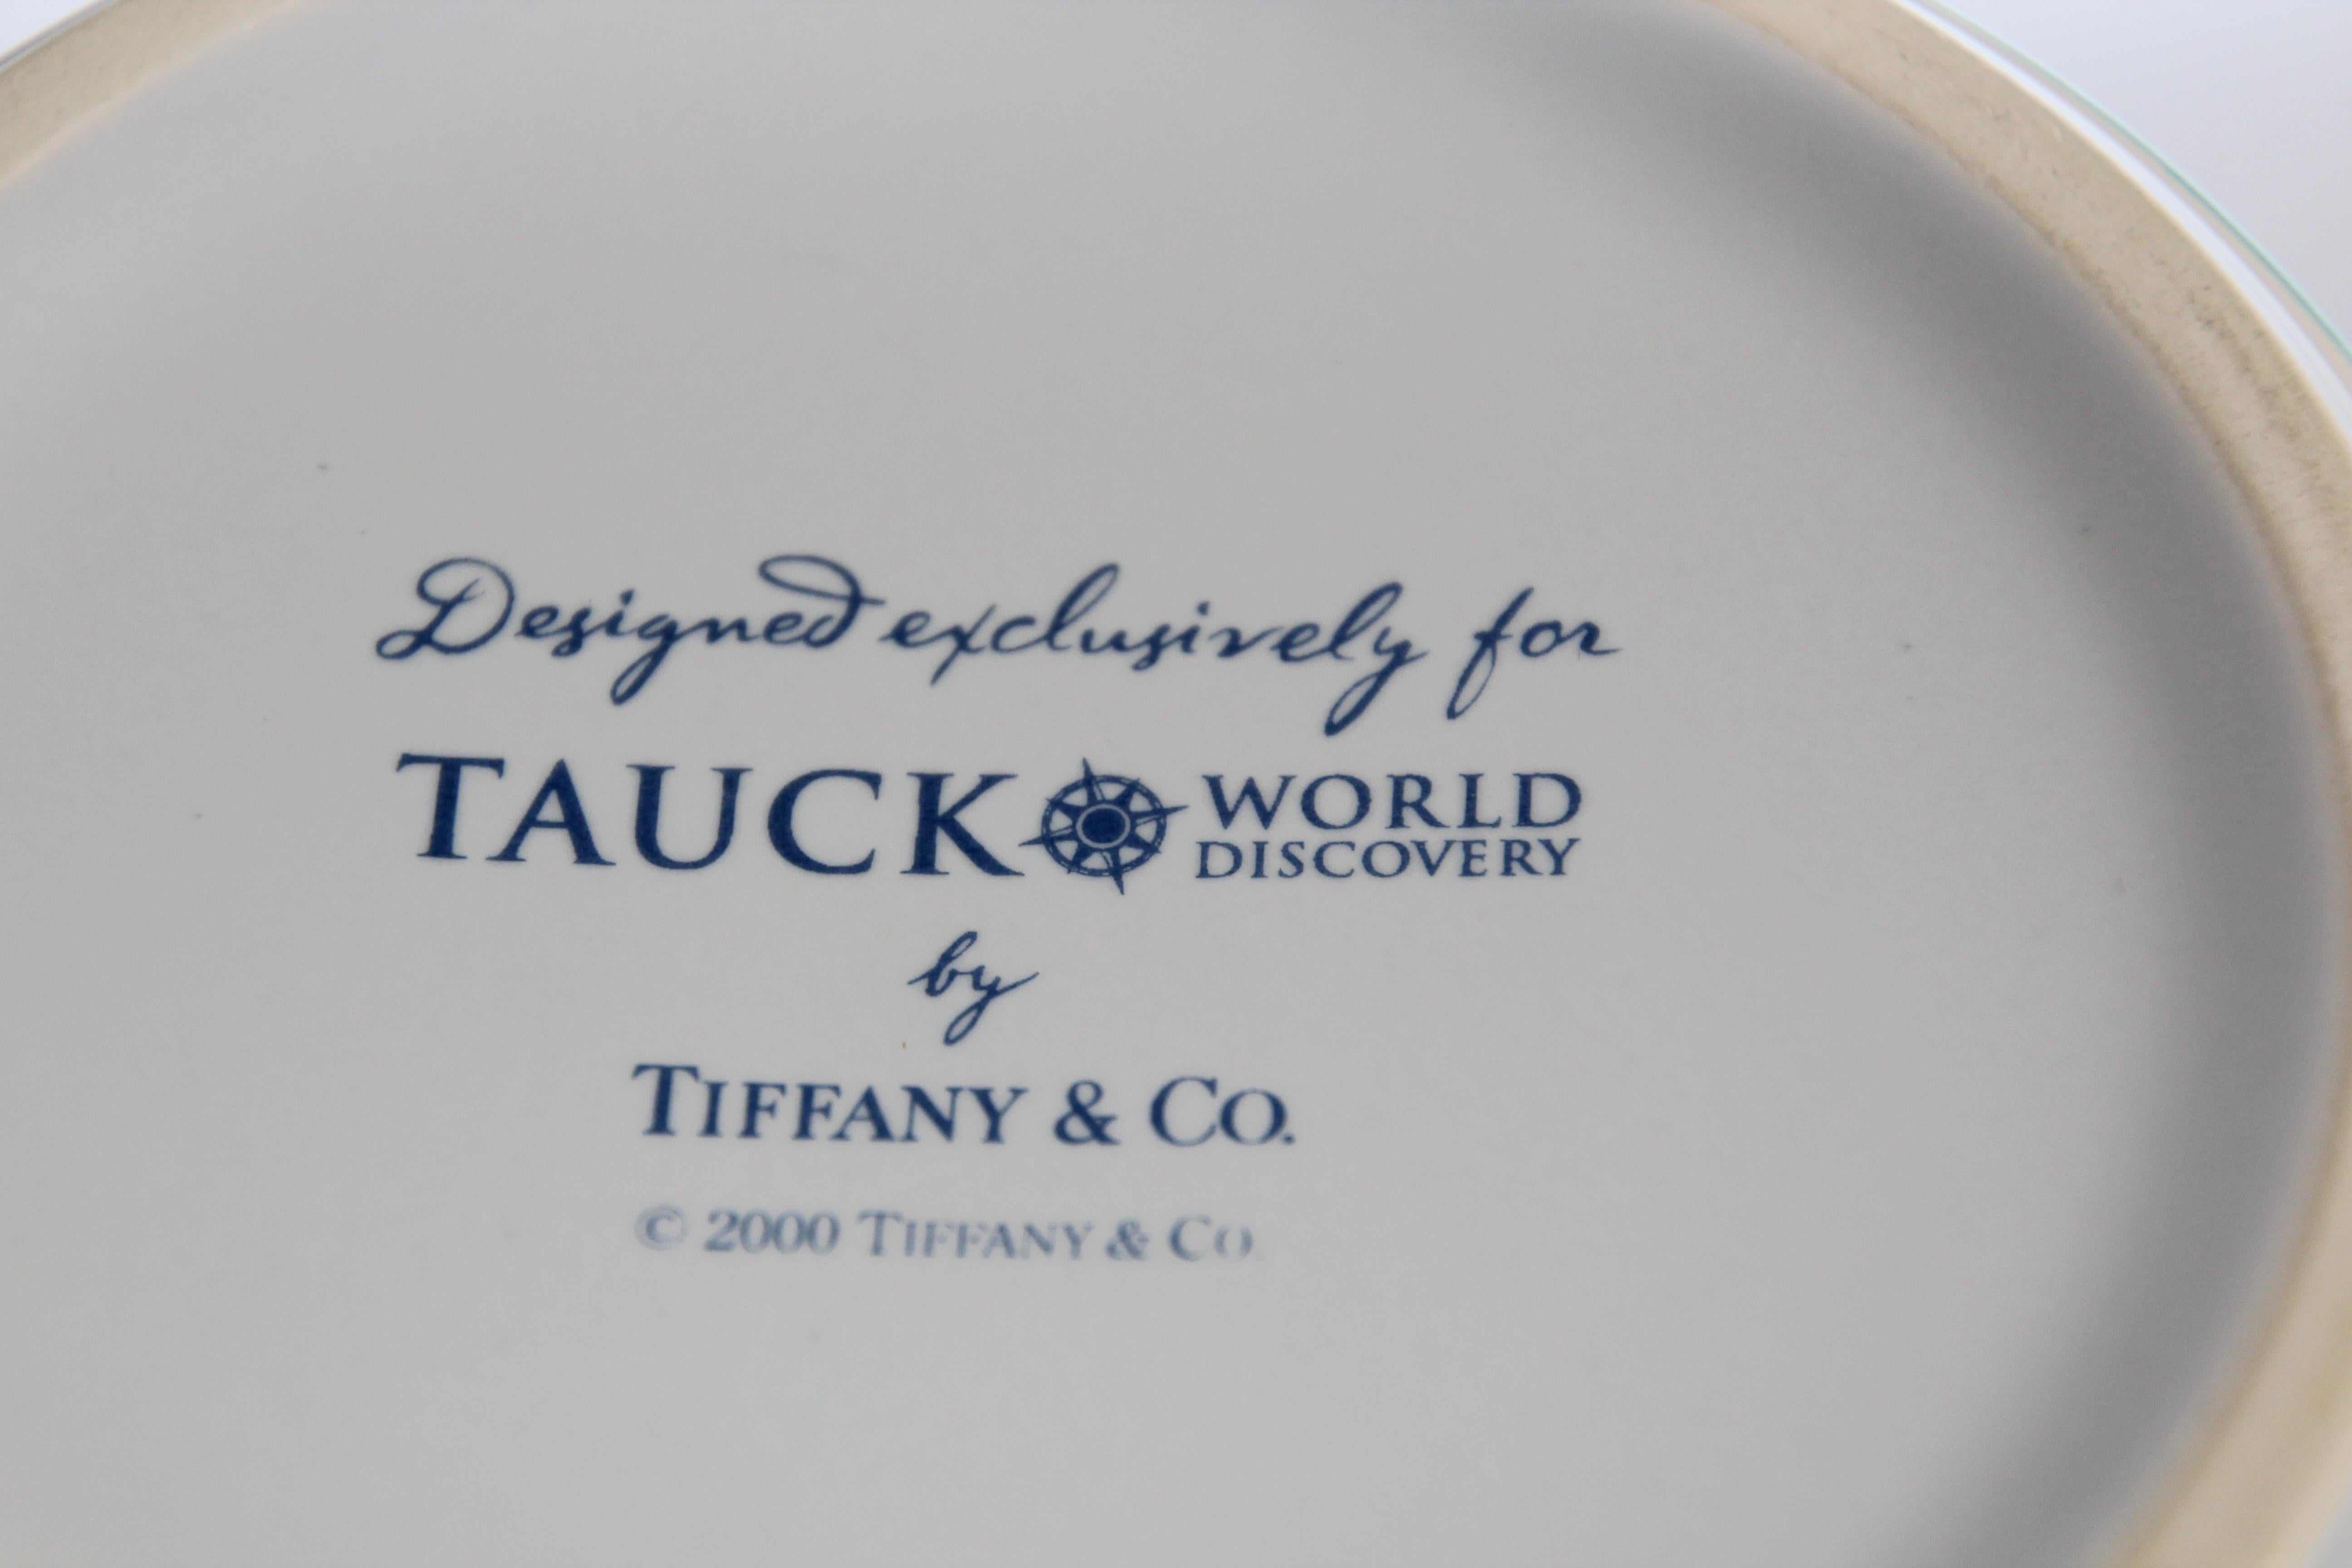 Hand-Painted Tiffany & Co. Porcelain Lidded Trinket Box Designed for Tauck World France For Sale